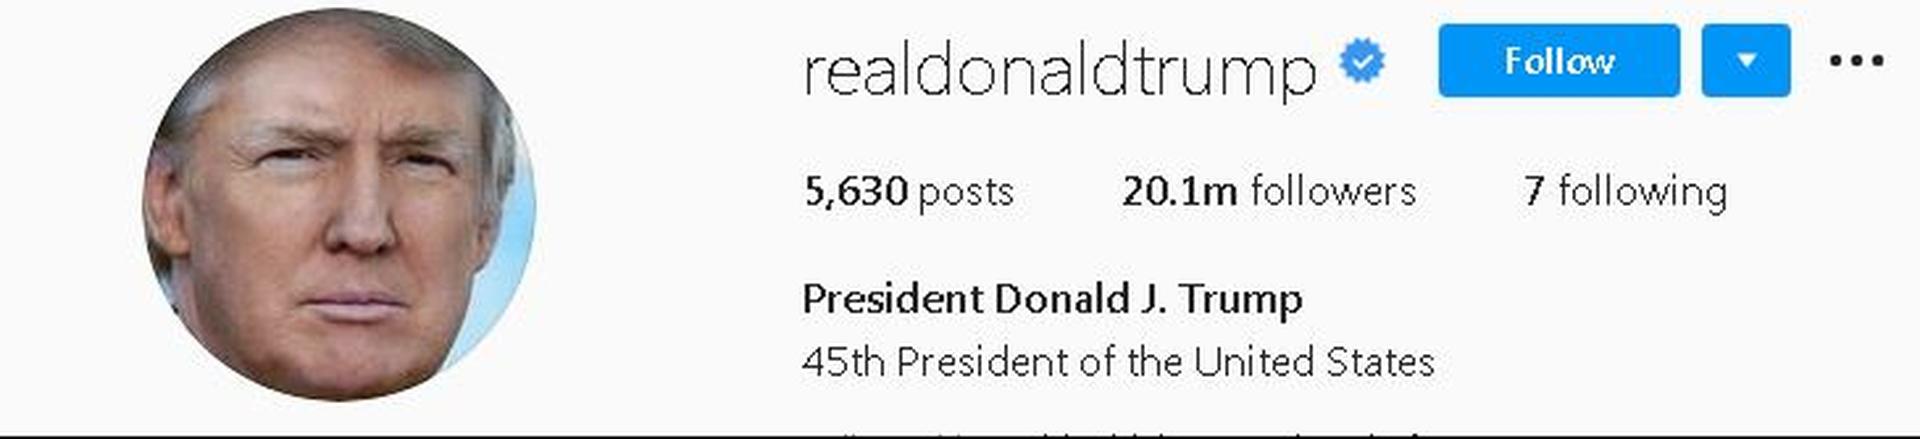 Donald Trump's Instagram account 